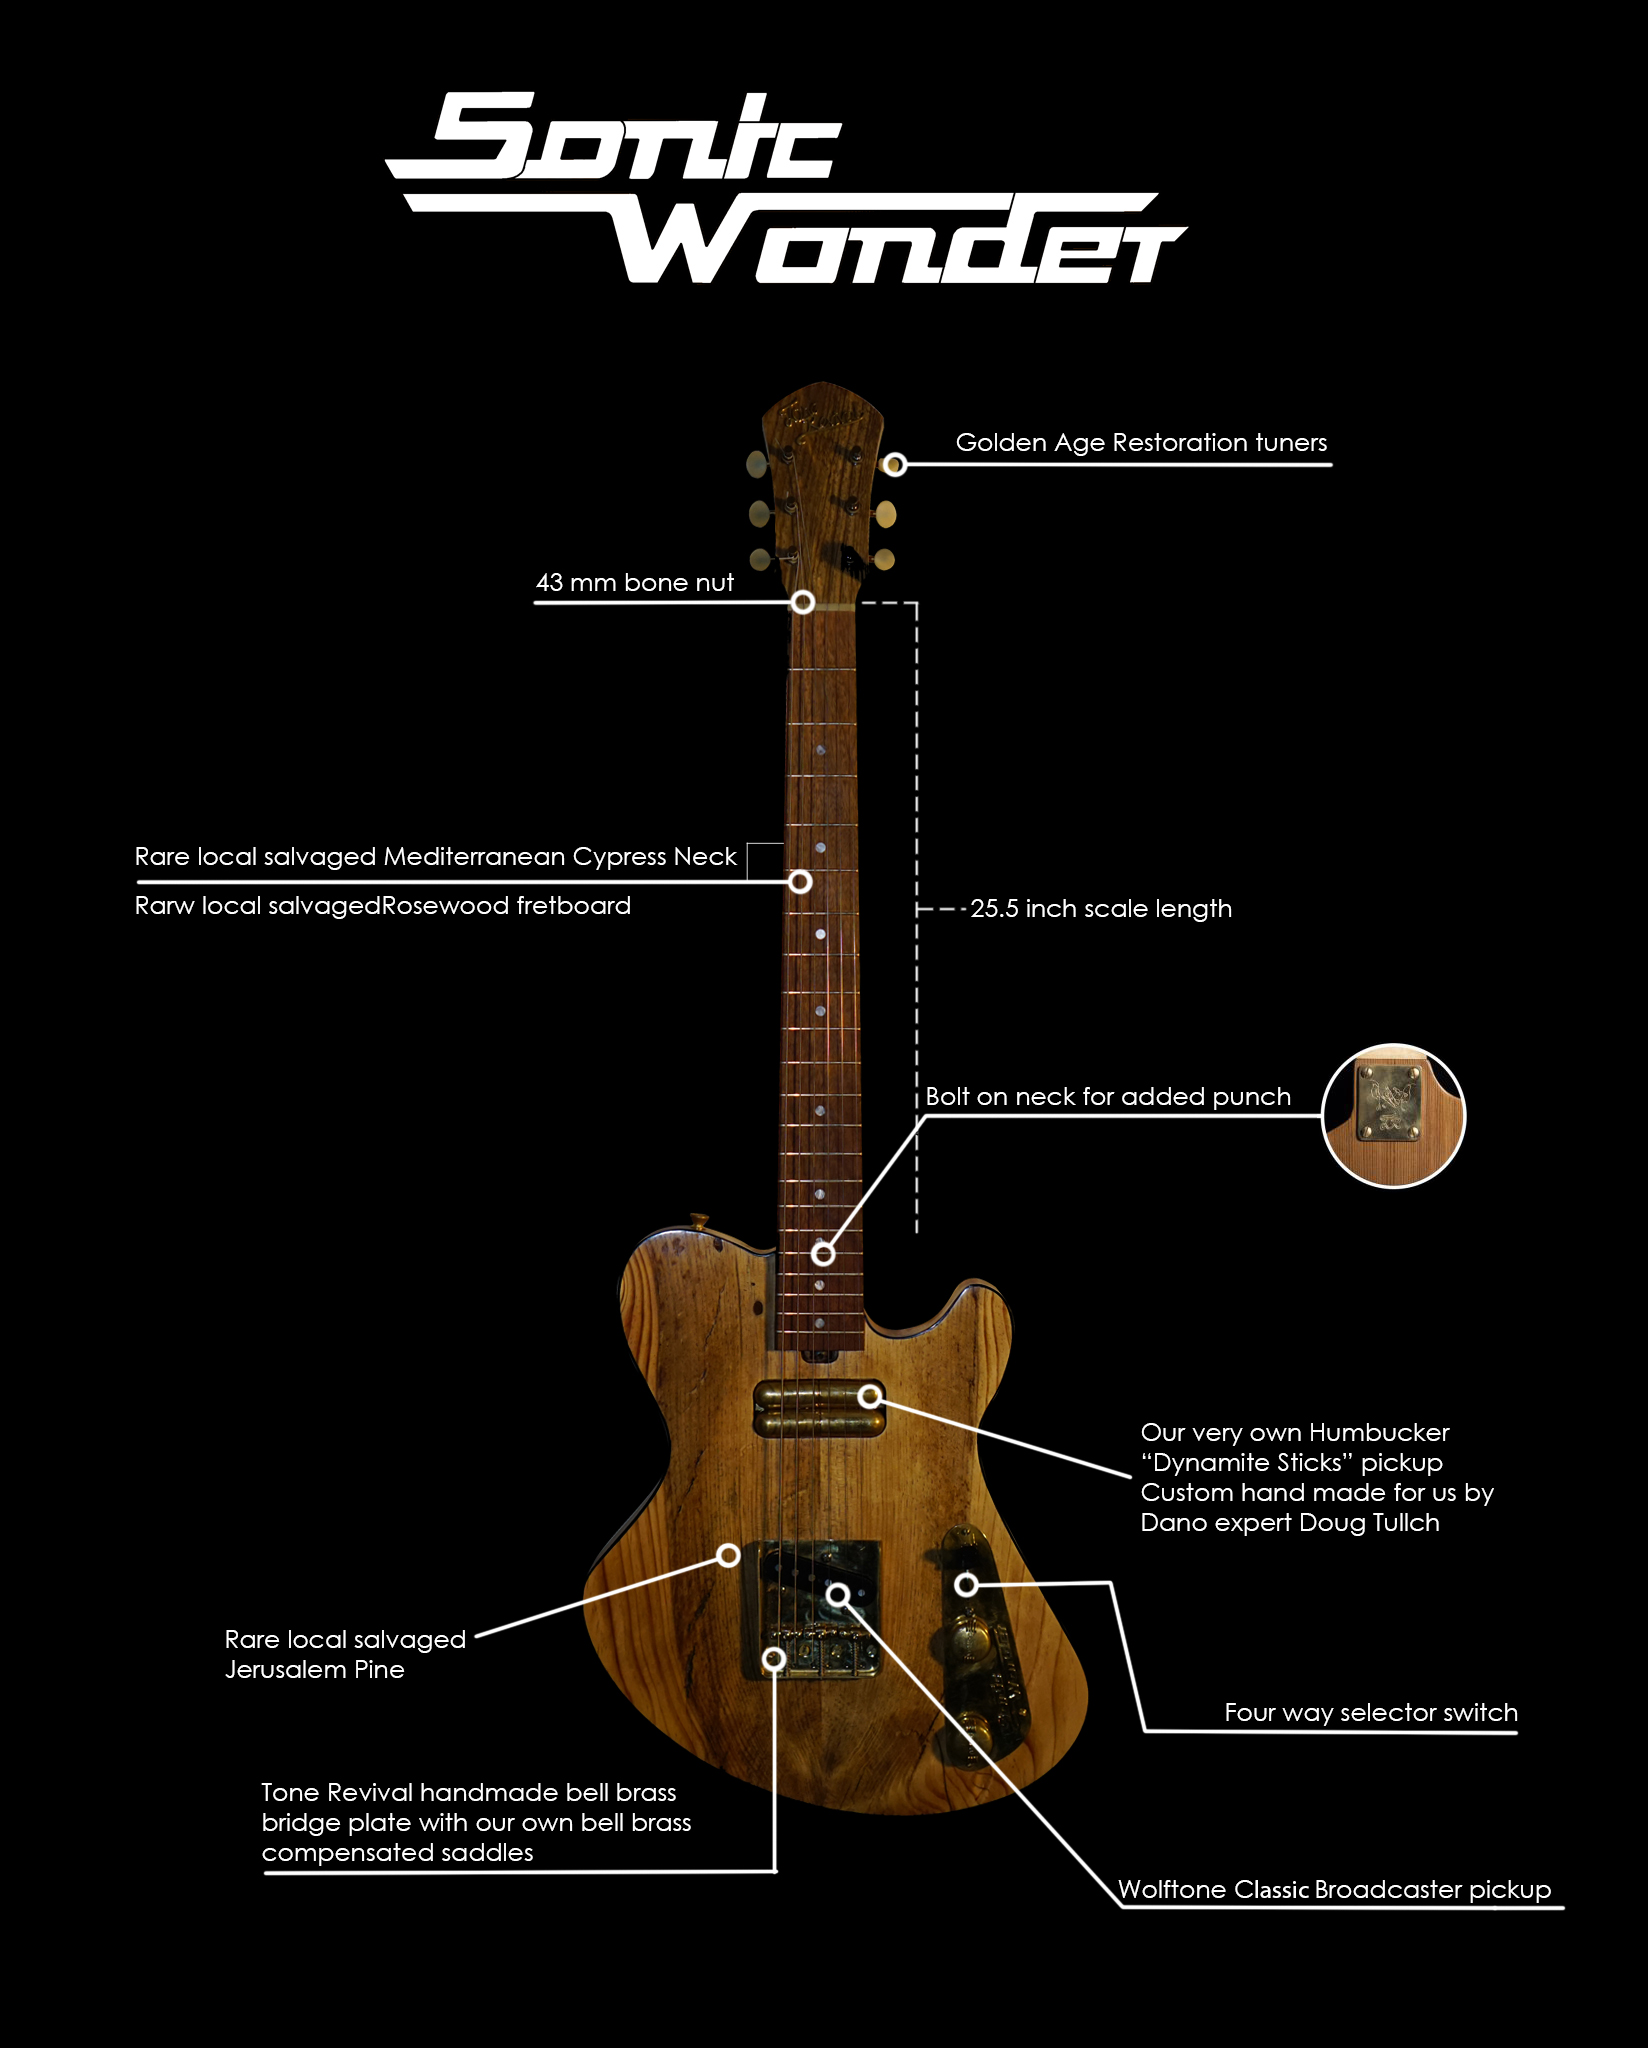 Boutique Guitar made from Jerusalem Pine - Building a salveged hollowbody woodpiece - Guitar specs